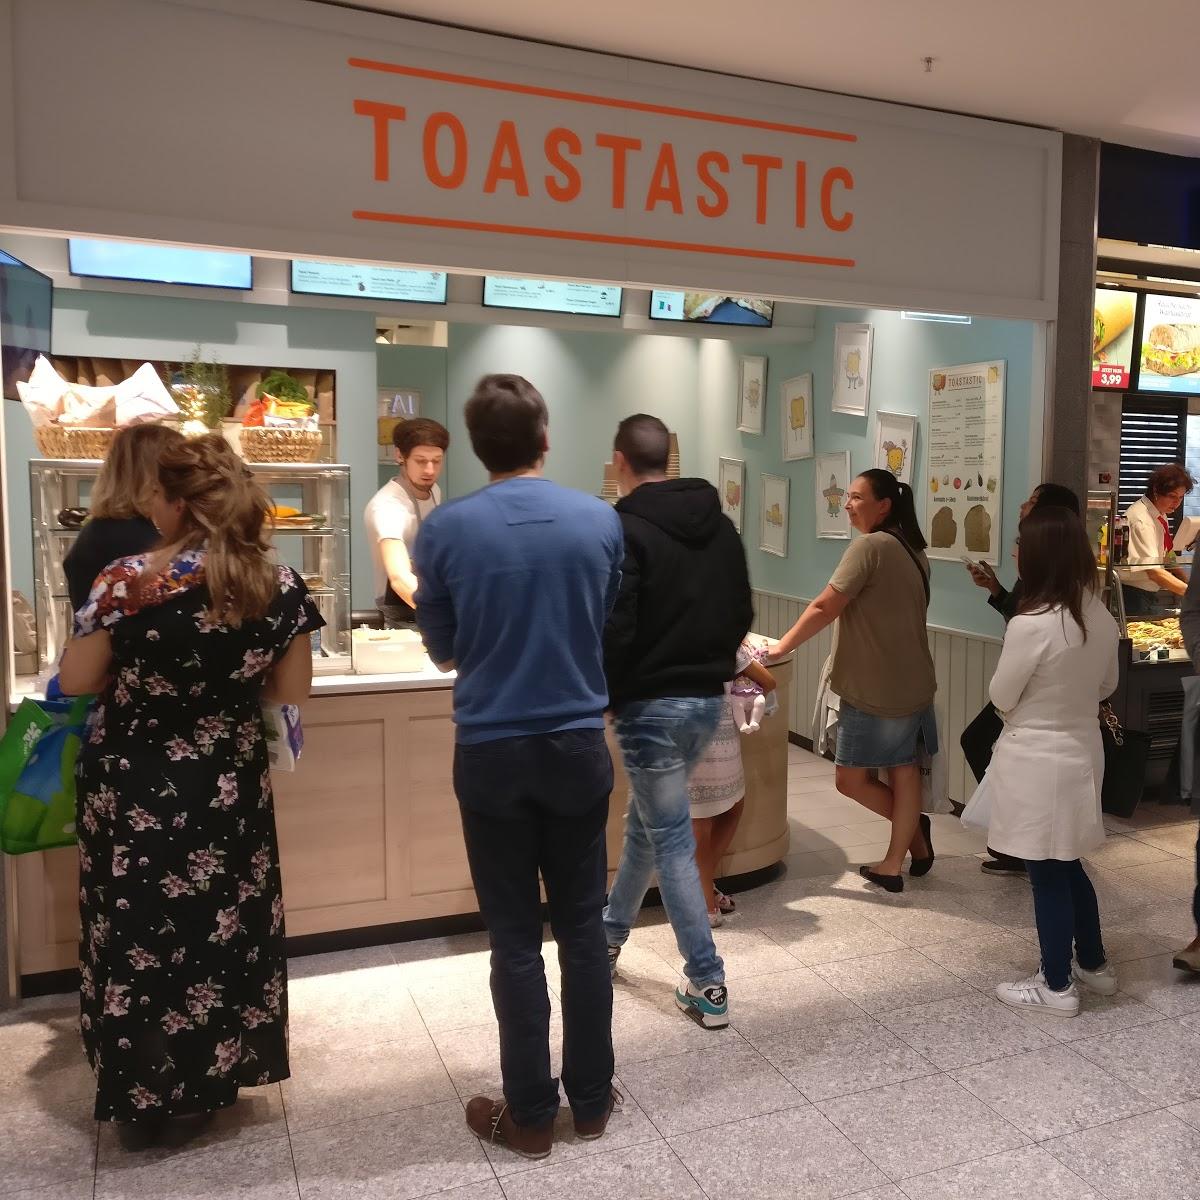 Restaurant "Toastastic" in München